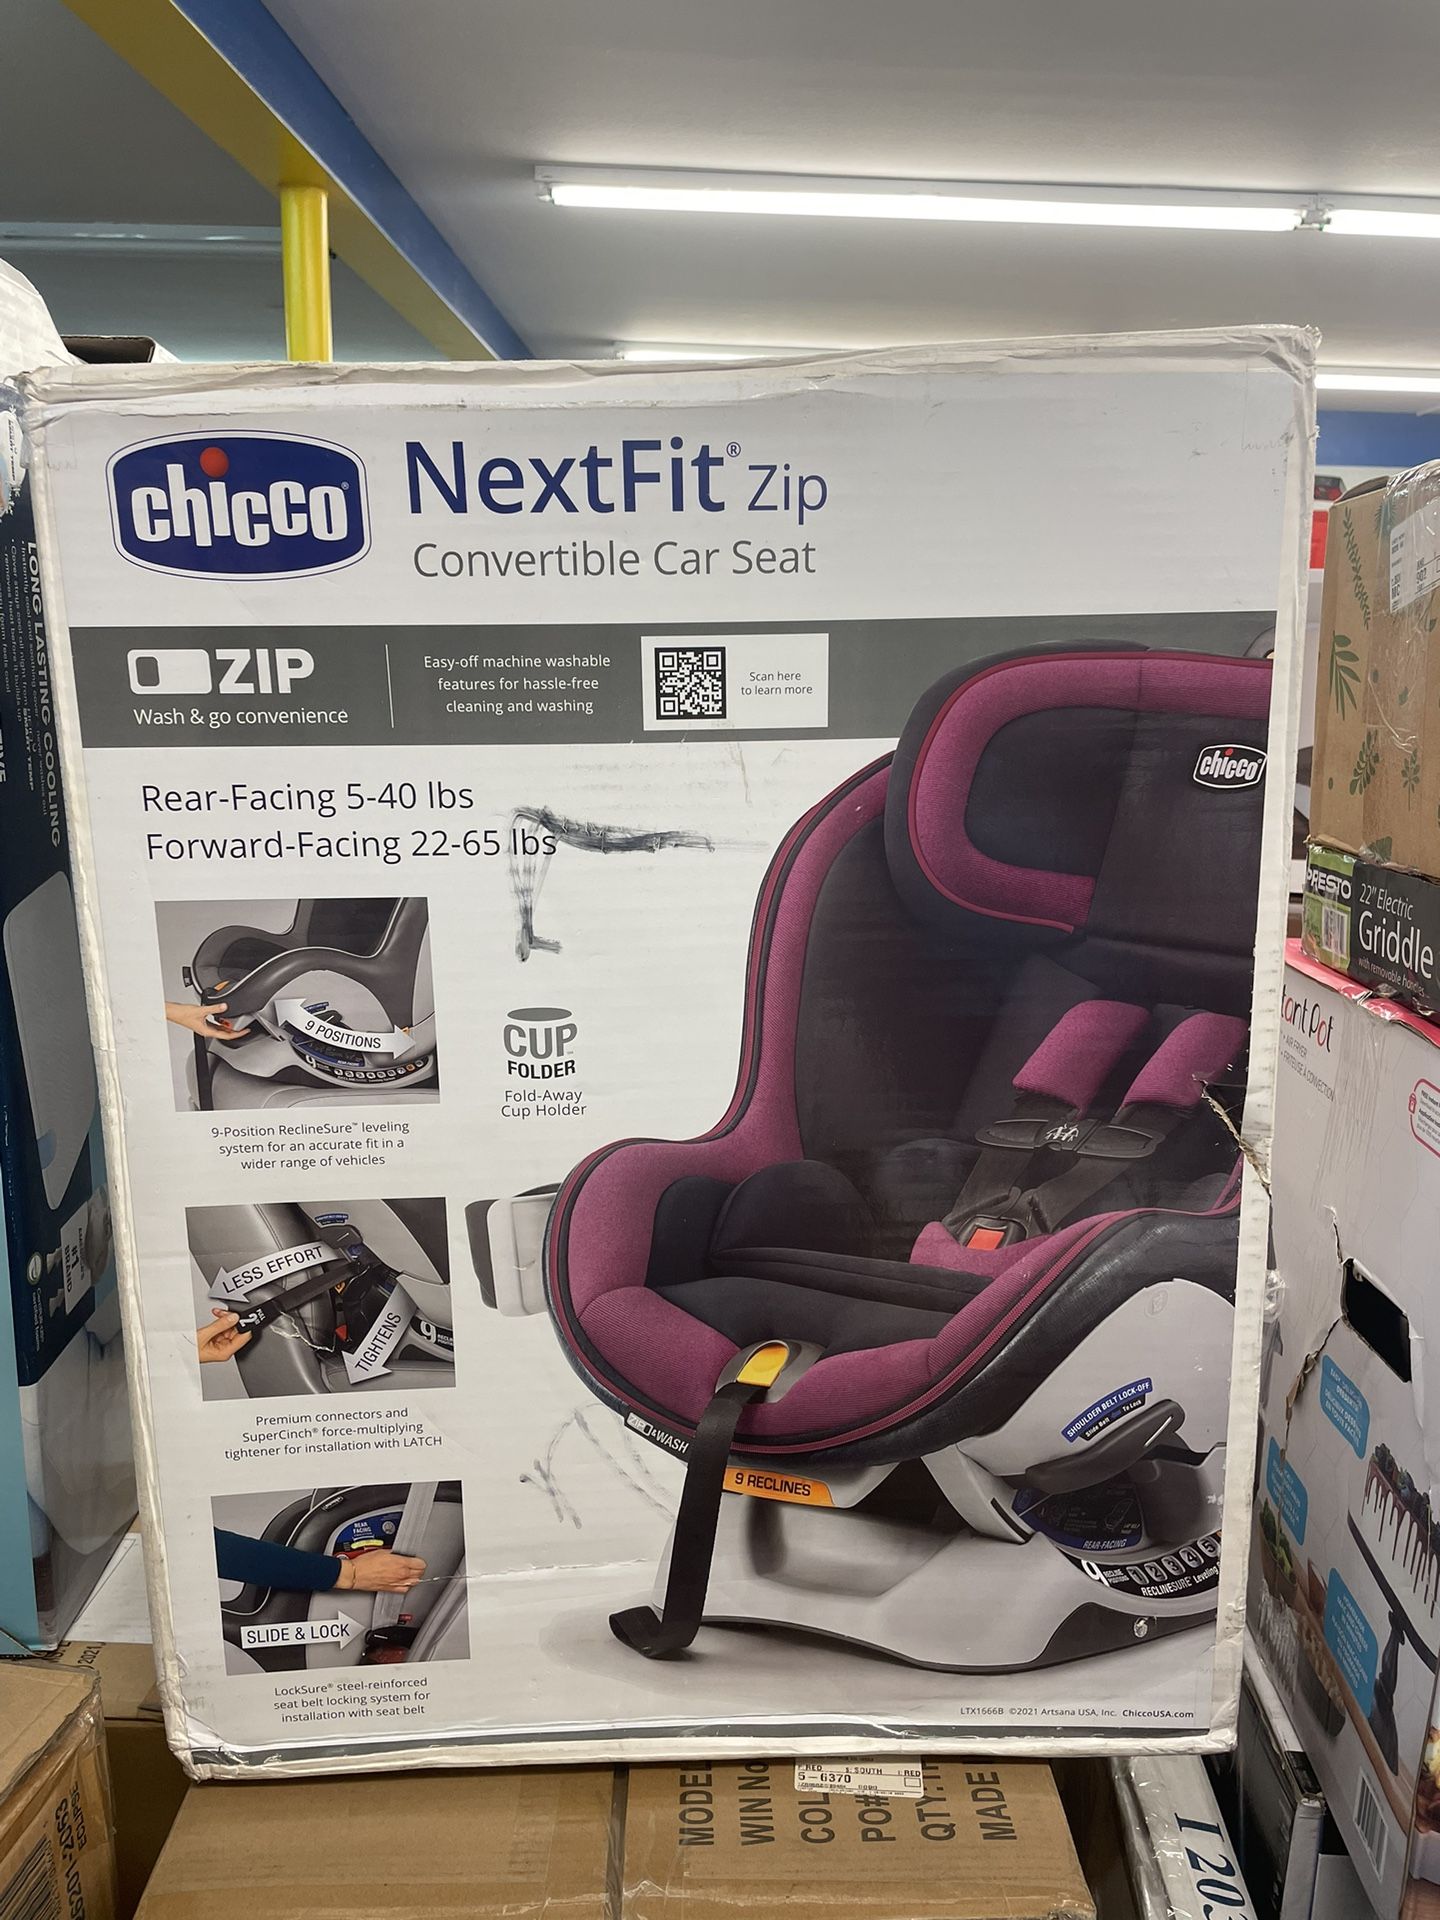 Chicco NextFit Max Zip Air Convertible Car Seat - Vero